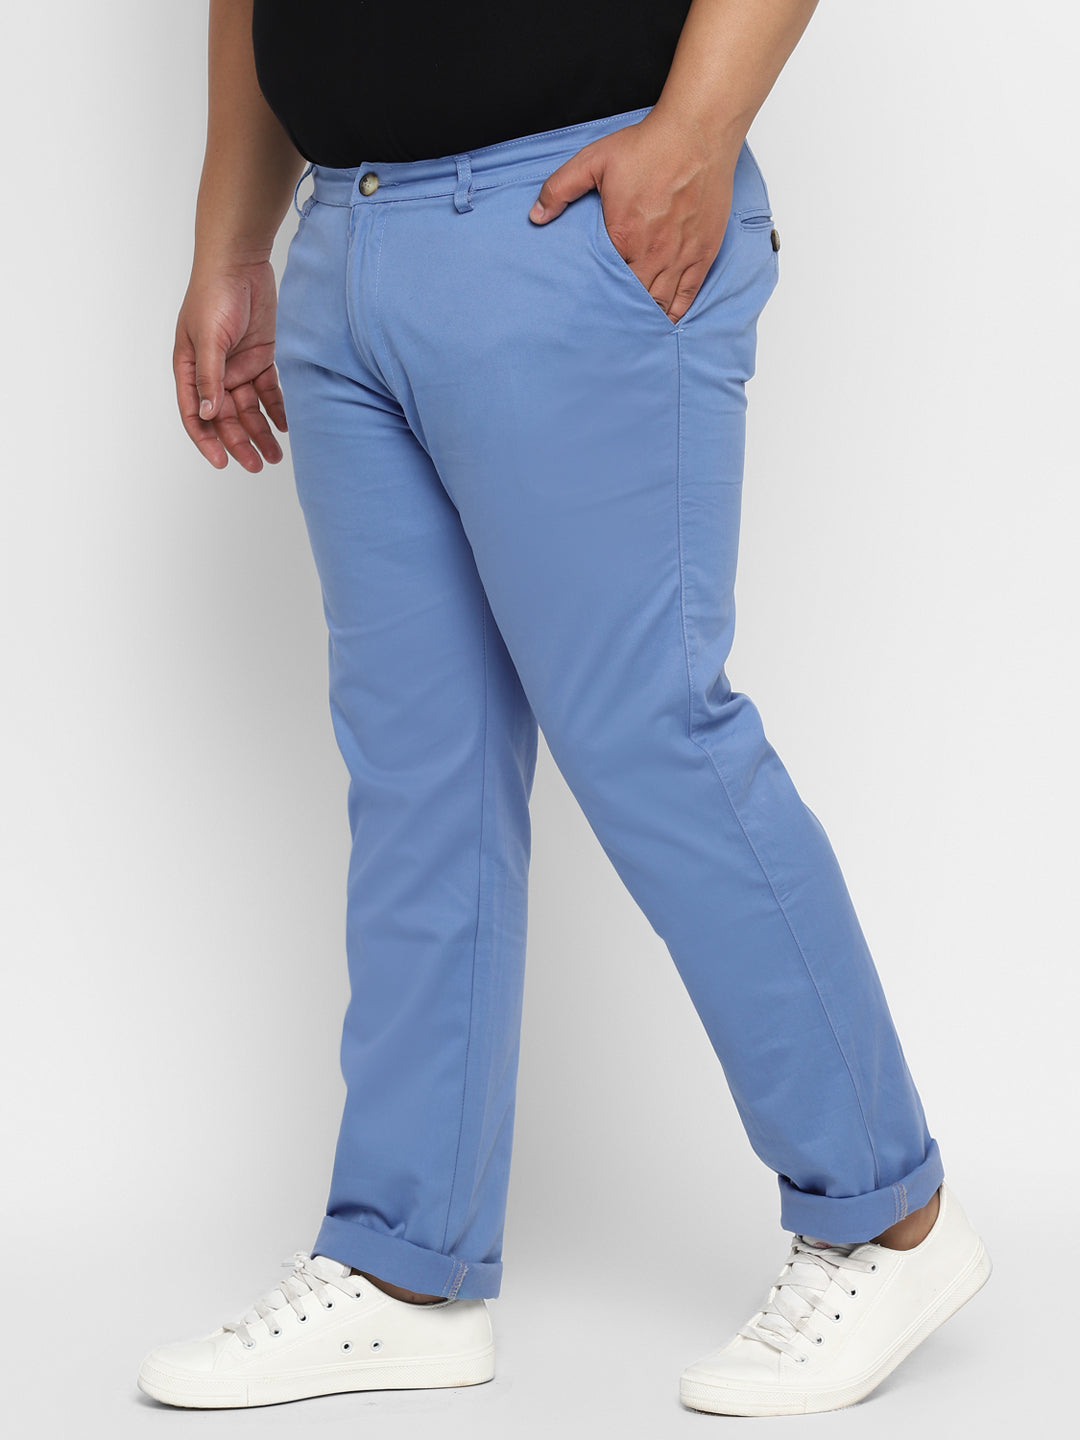 Urbano Plus Men's Sky Blue Cotton Regular Fit Casual Chino Pants Stretch